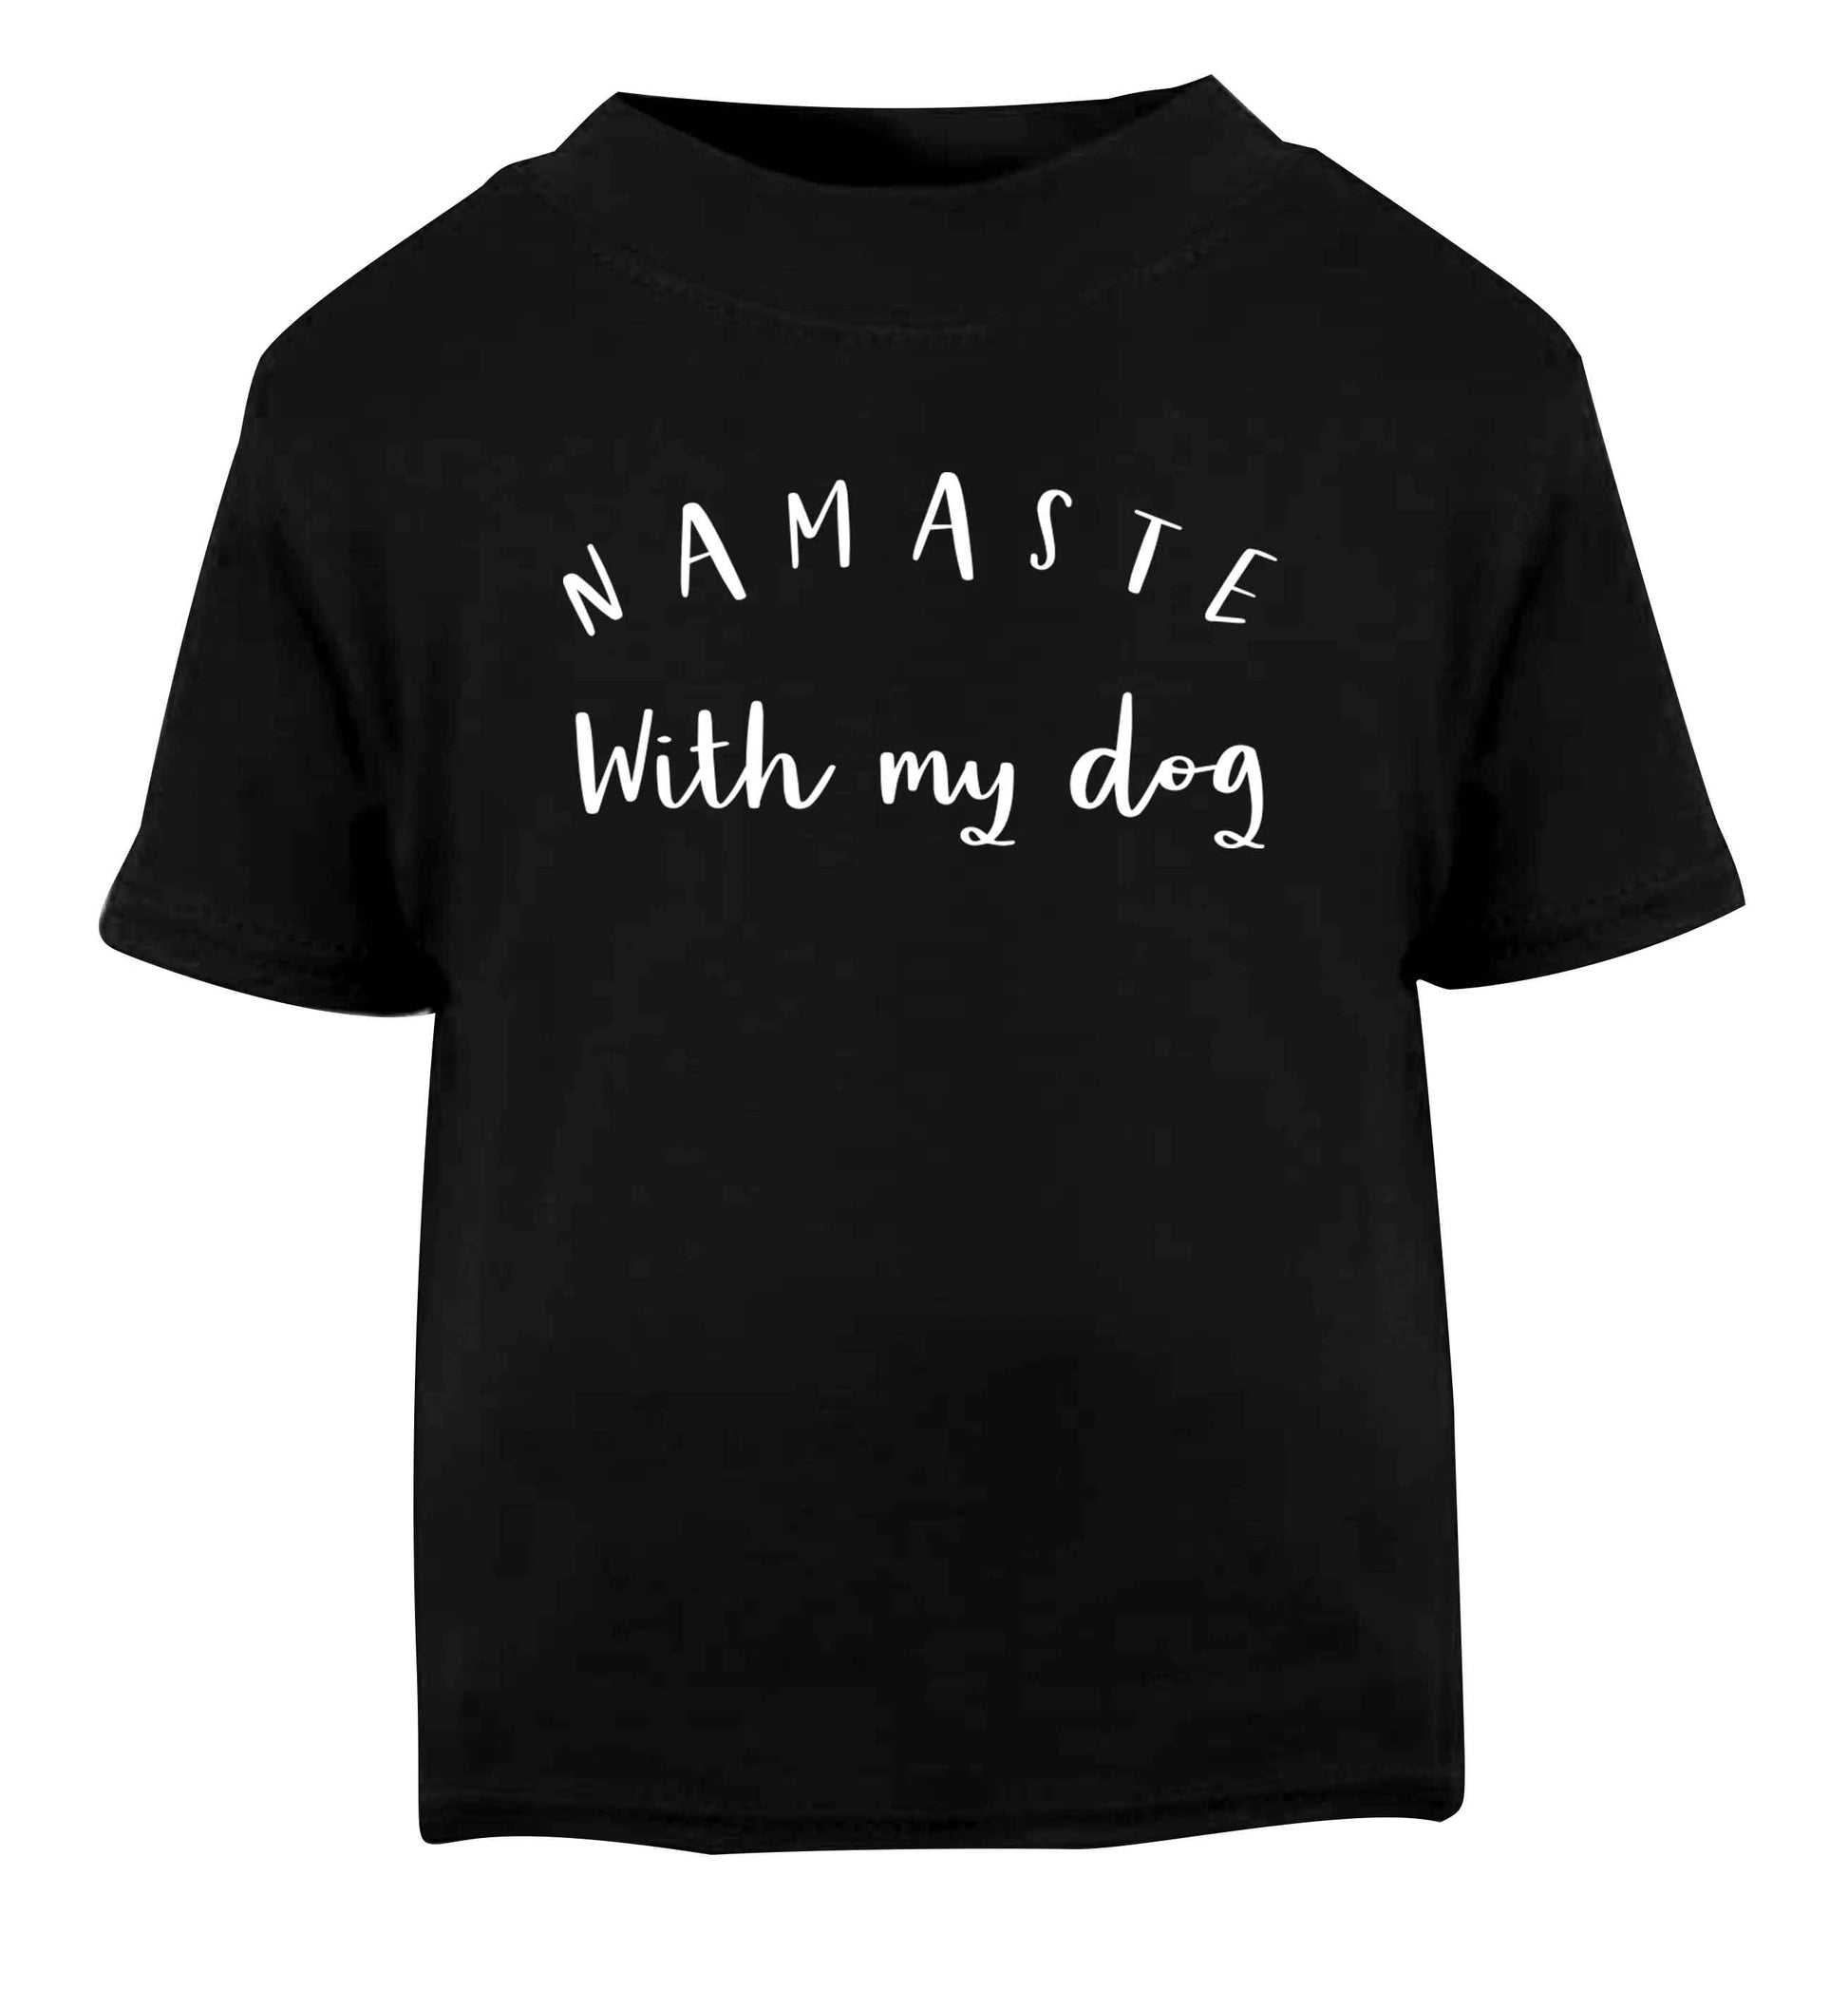 Namaste with my dog Black Baby Toddler Tshirt 2 years